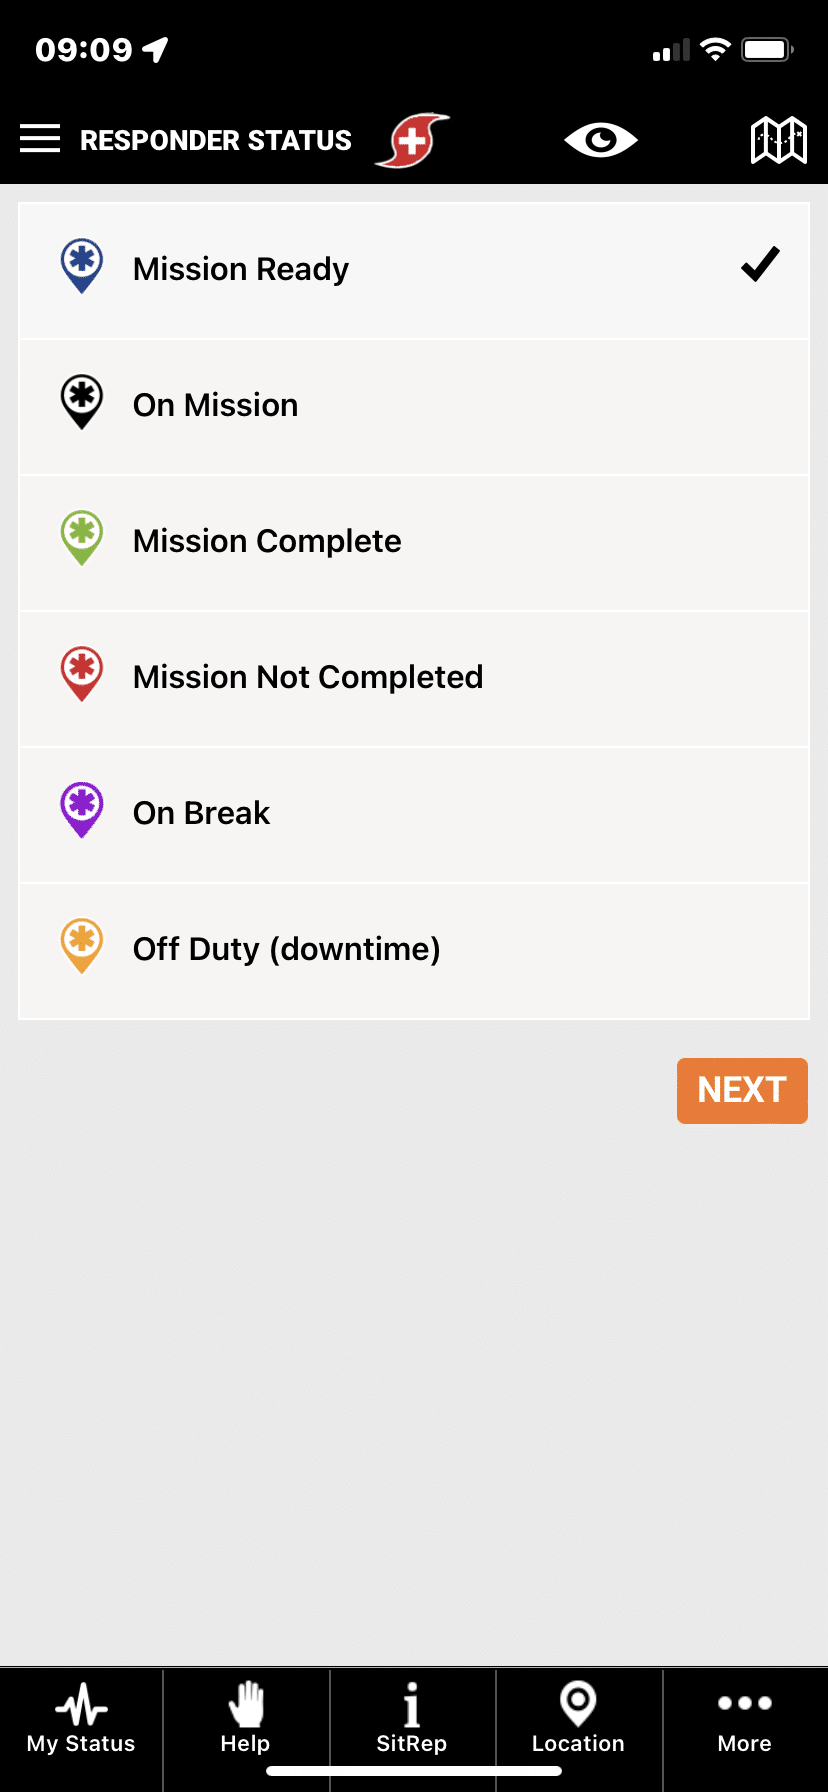 Responder Mission Status